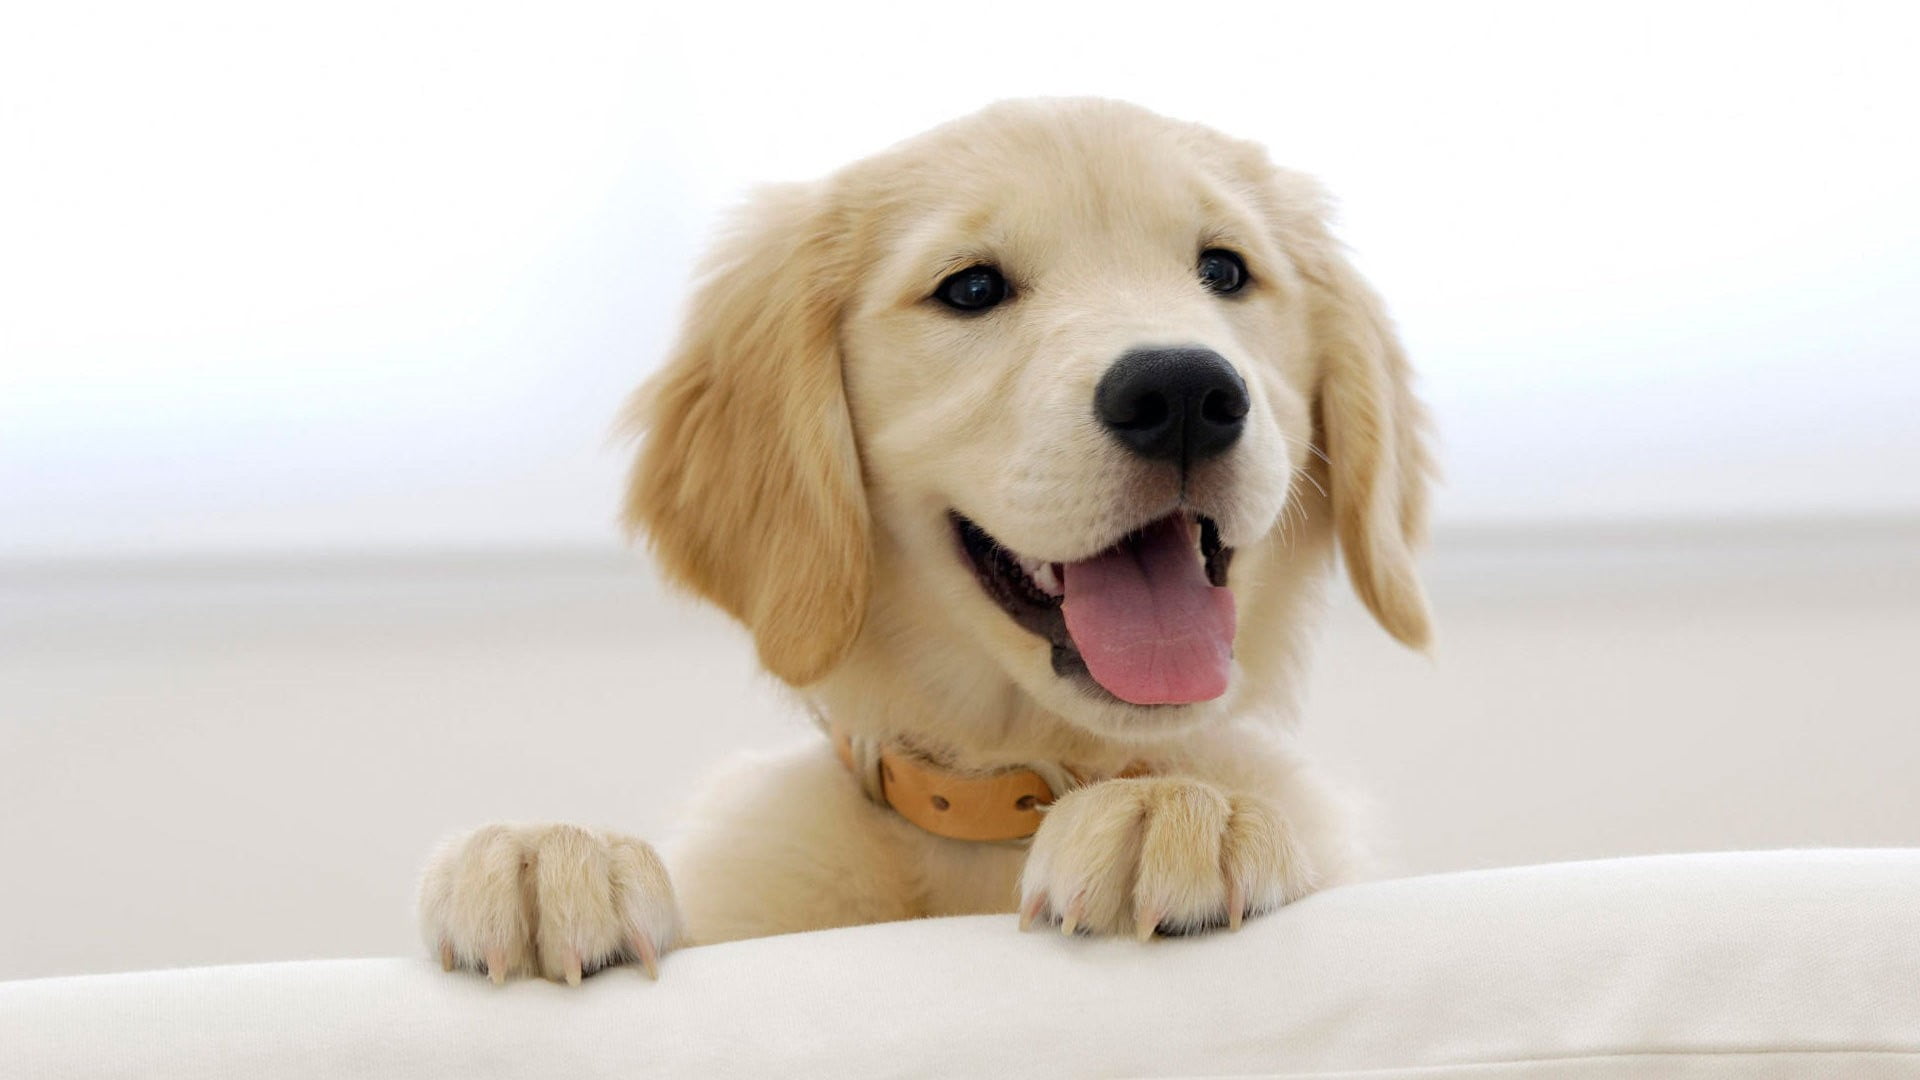 beige dog, puppies, golden retrievers, animals, canine, pets